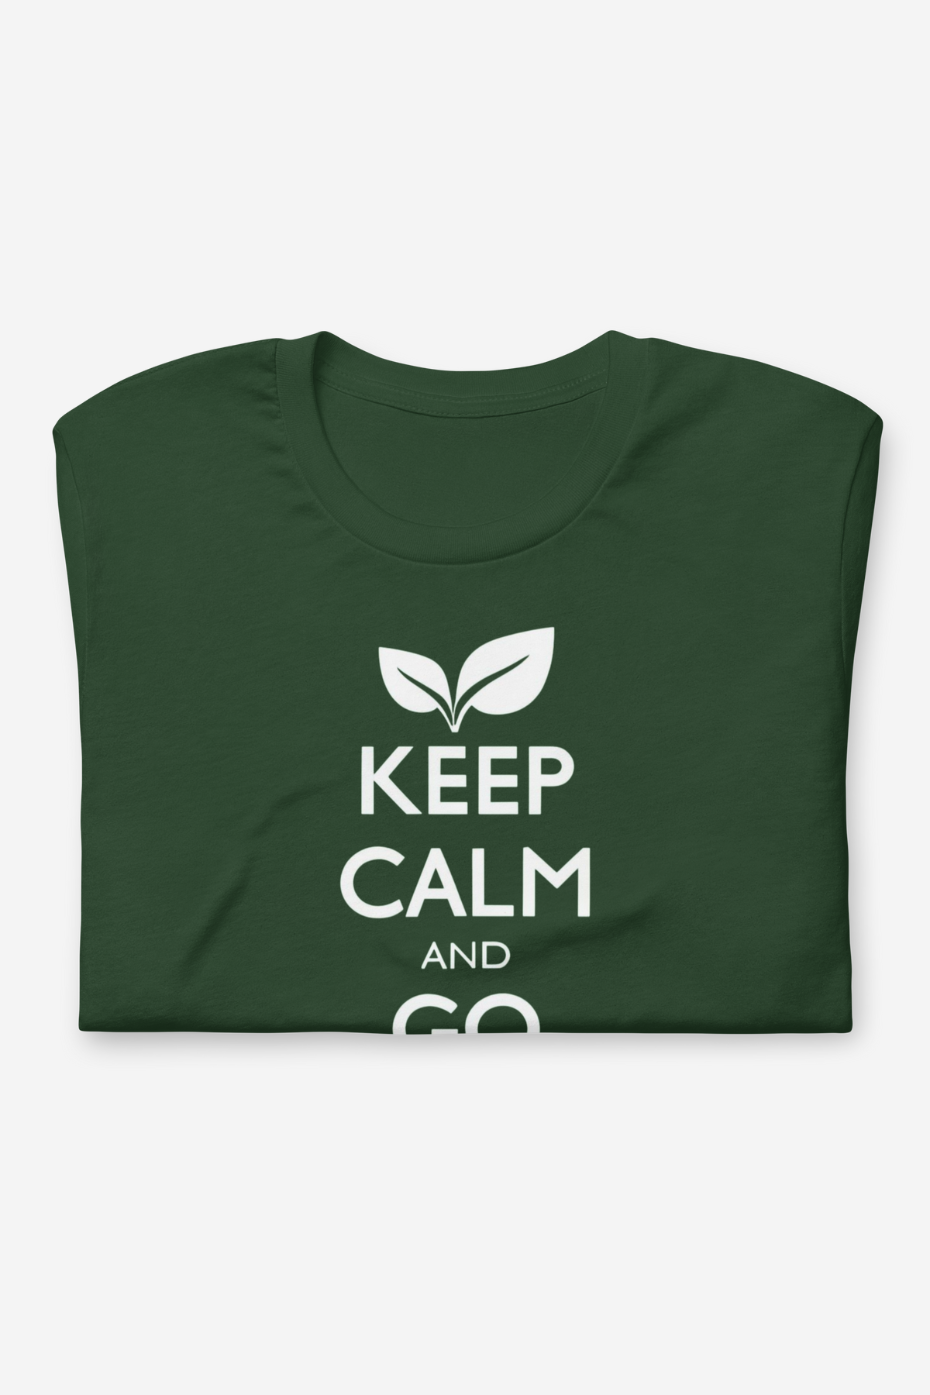 Keep Calm and Go Vegan Unisex t-shirt